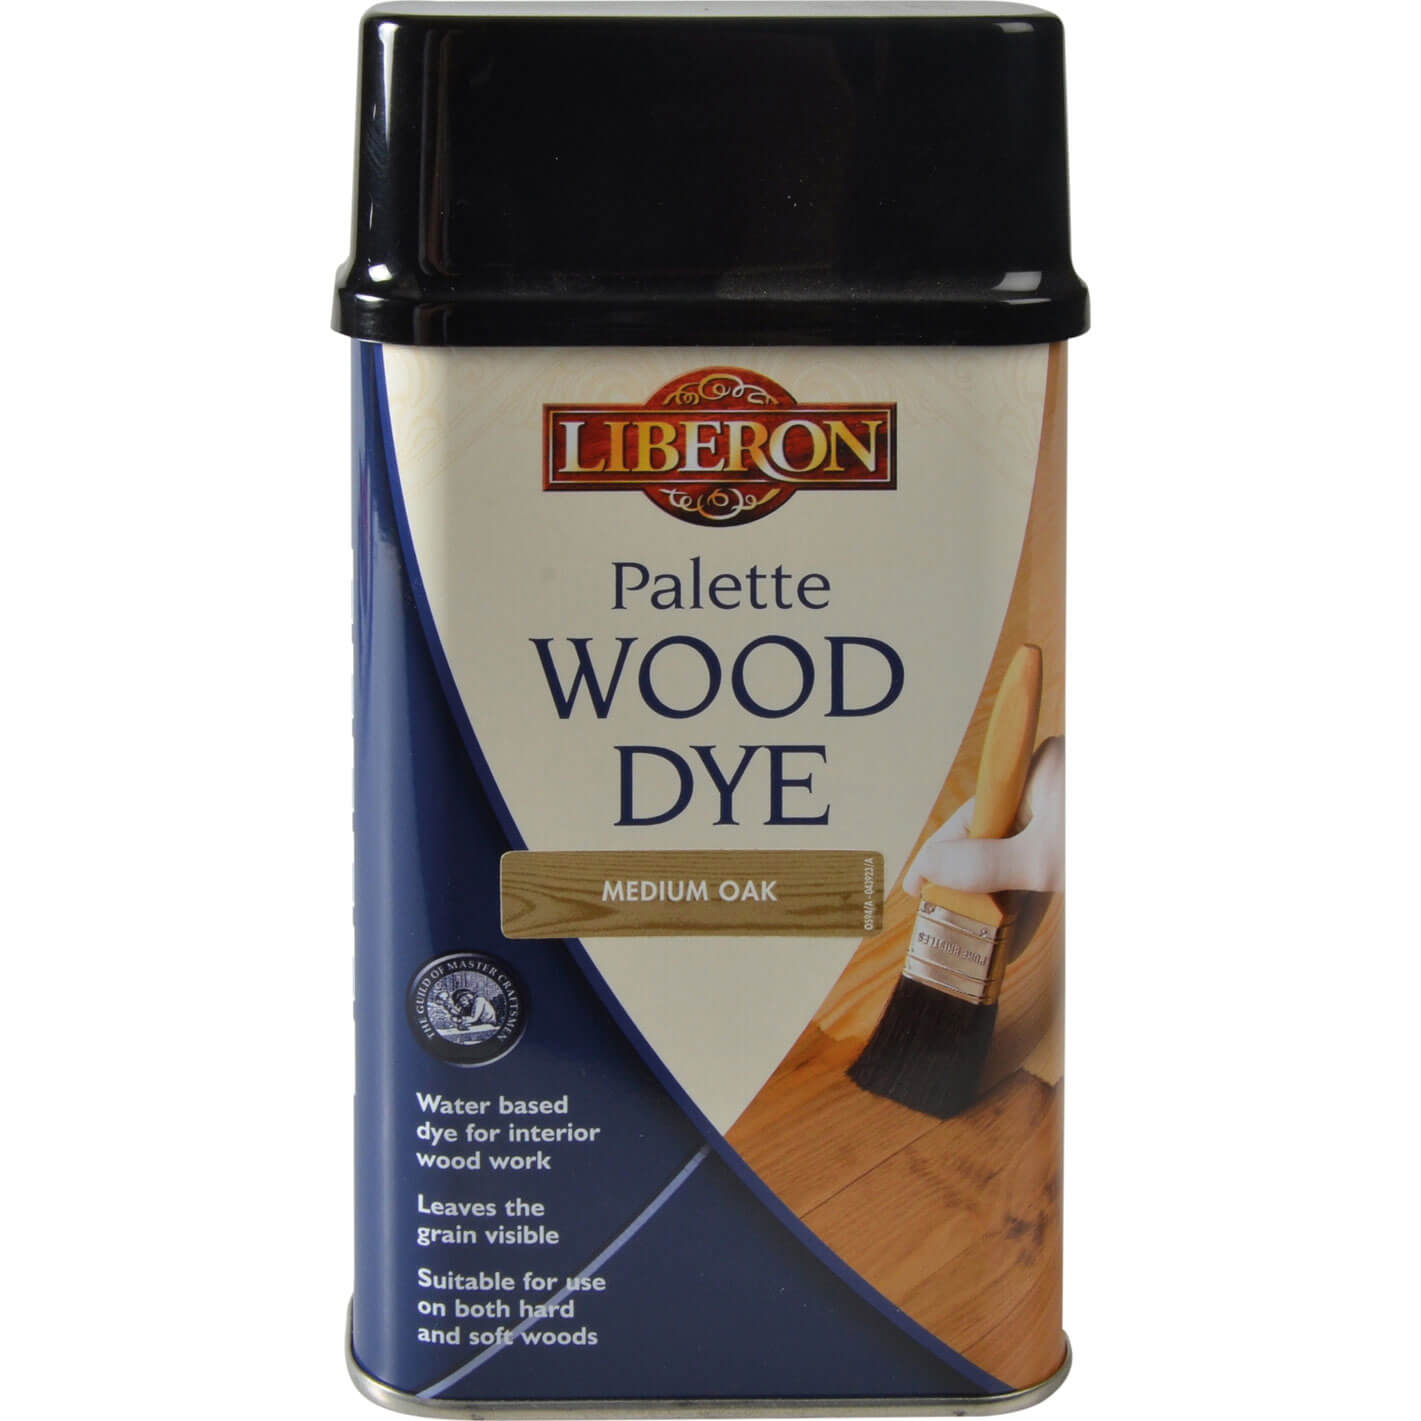 Image of Liberon Palette Wood Dye Medium Oak 500ml